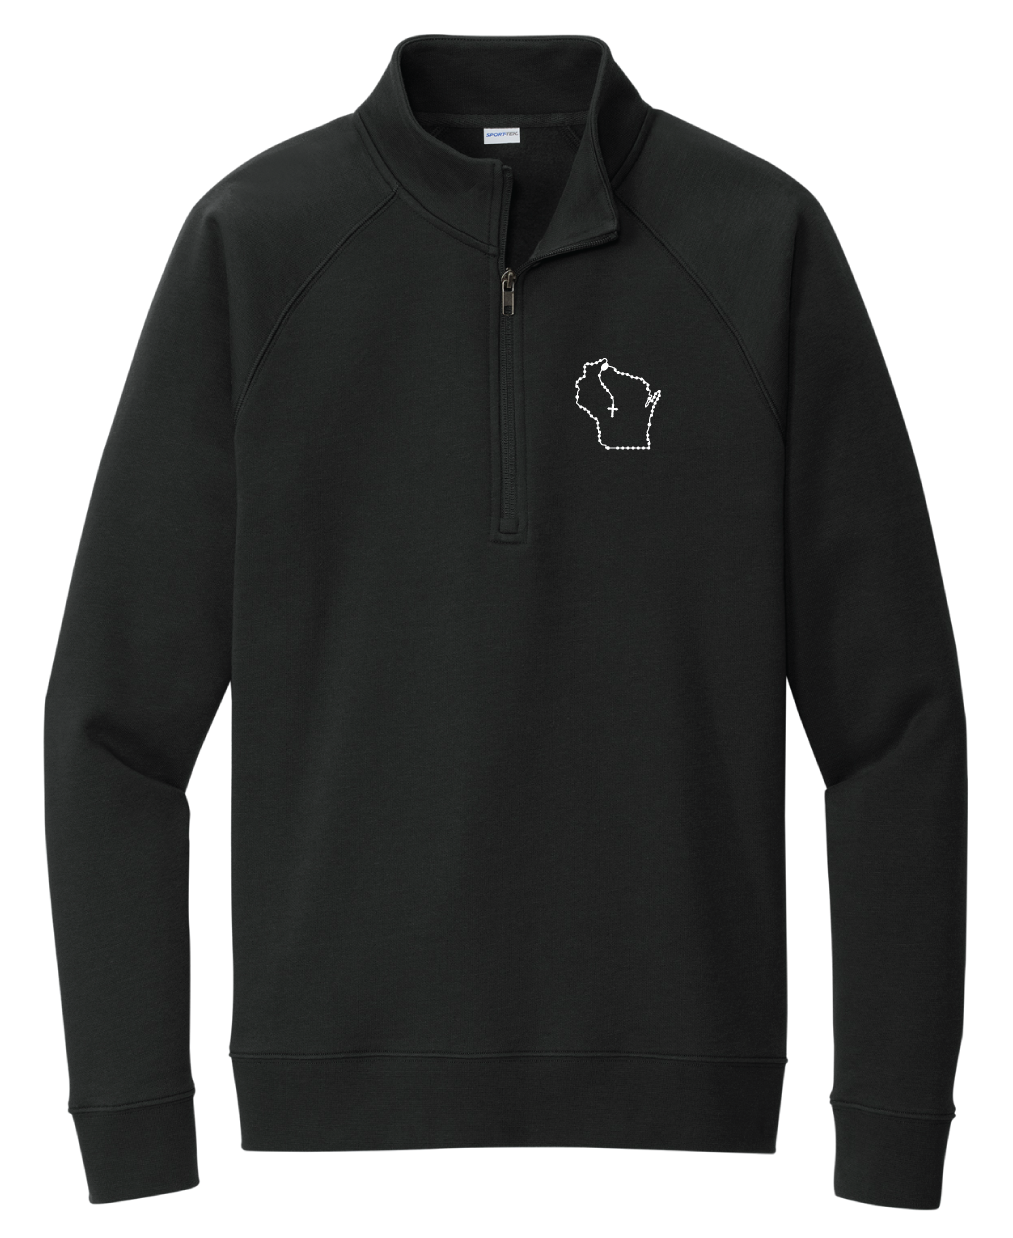 Wisconsin Catholic Rosary Black Quarter Zip Sweatshirt